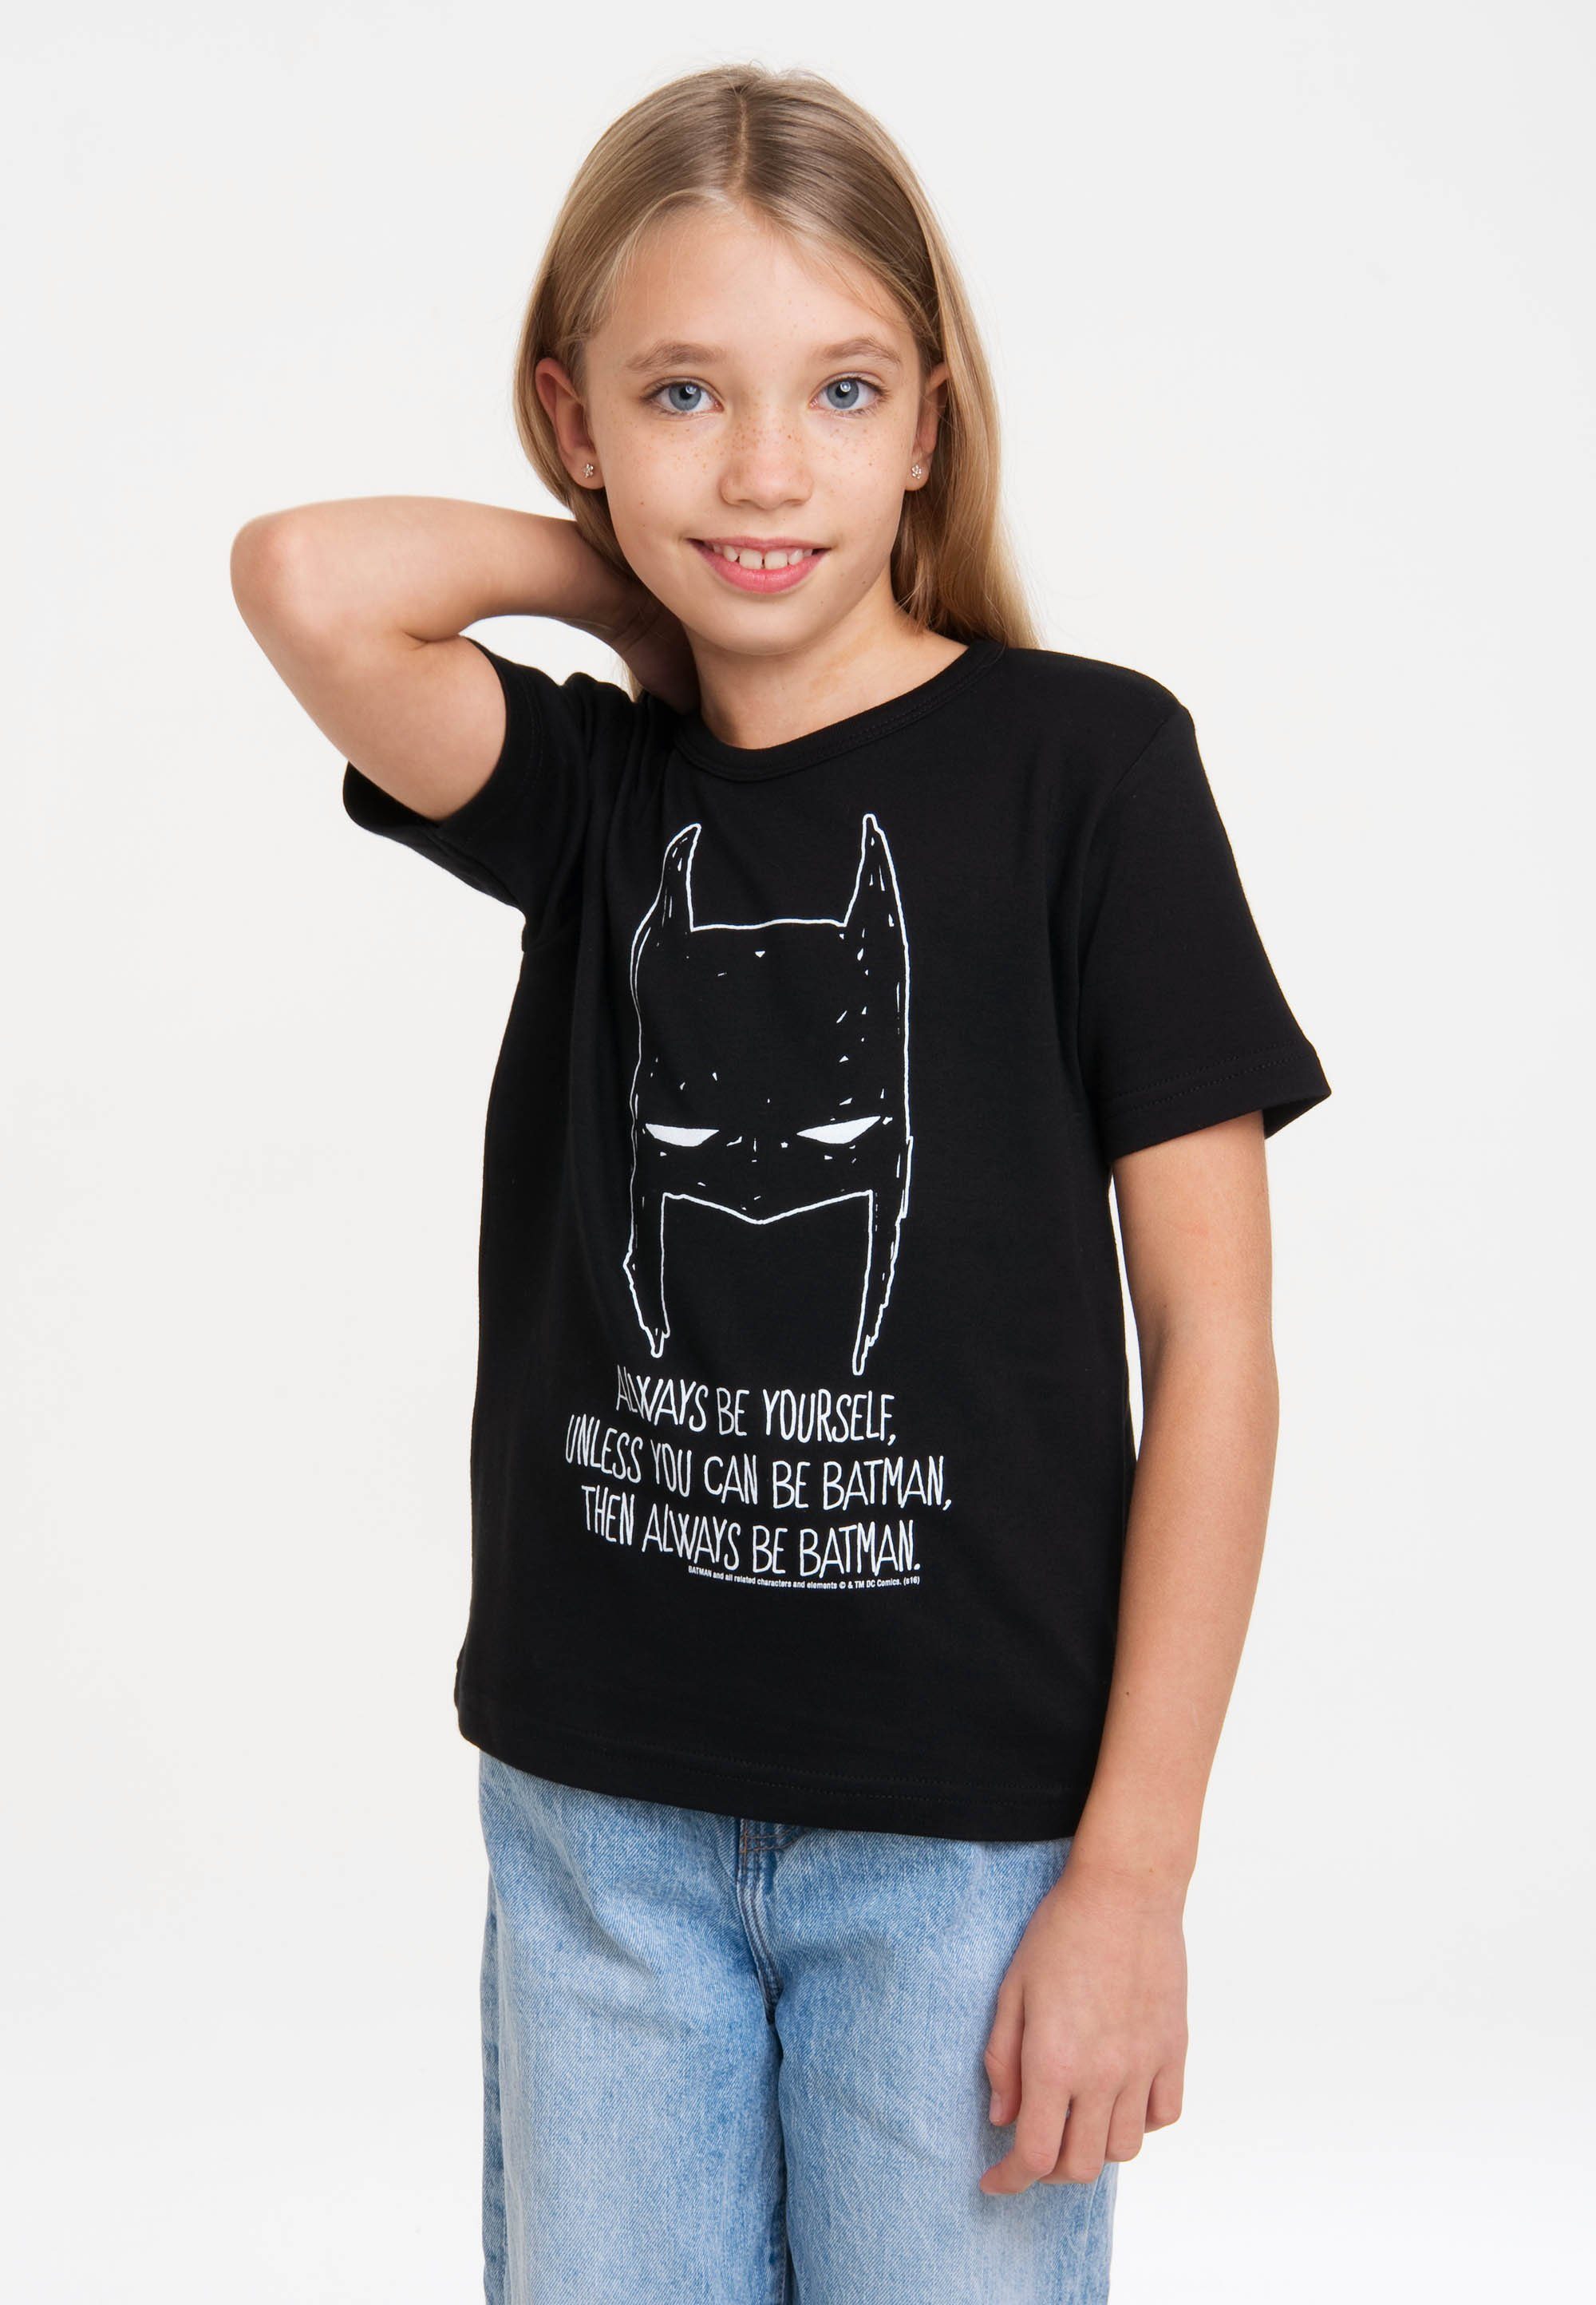 LOGOSHIRT T-Shirt DC - Batman-Print mit coolem Yourself Be Batman - Always